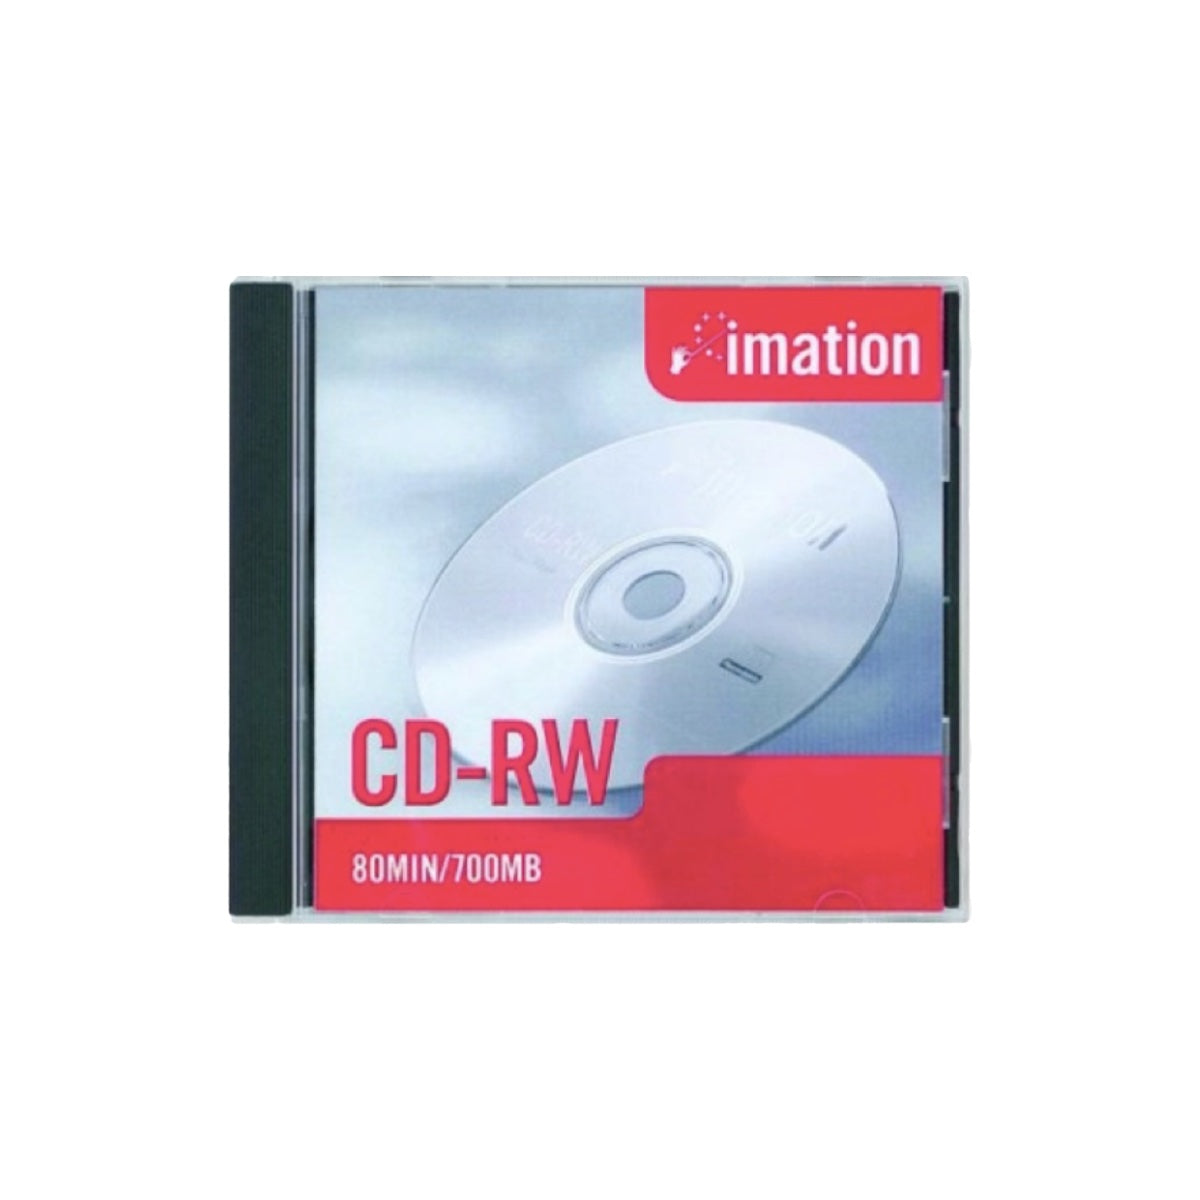 Imation CD-RW, 52x / 700MB / 80Min, in jewel case